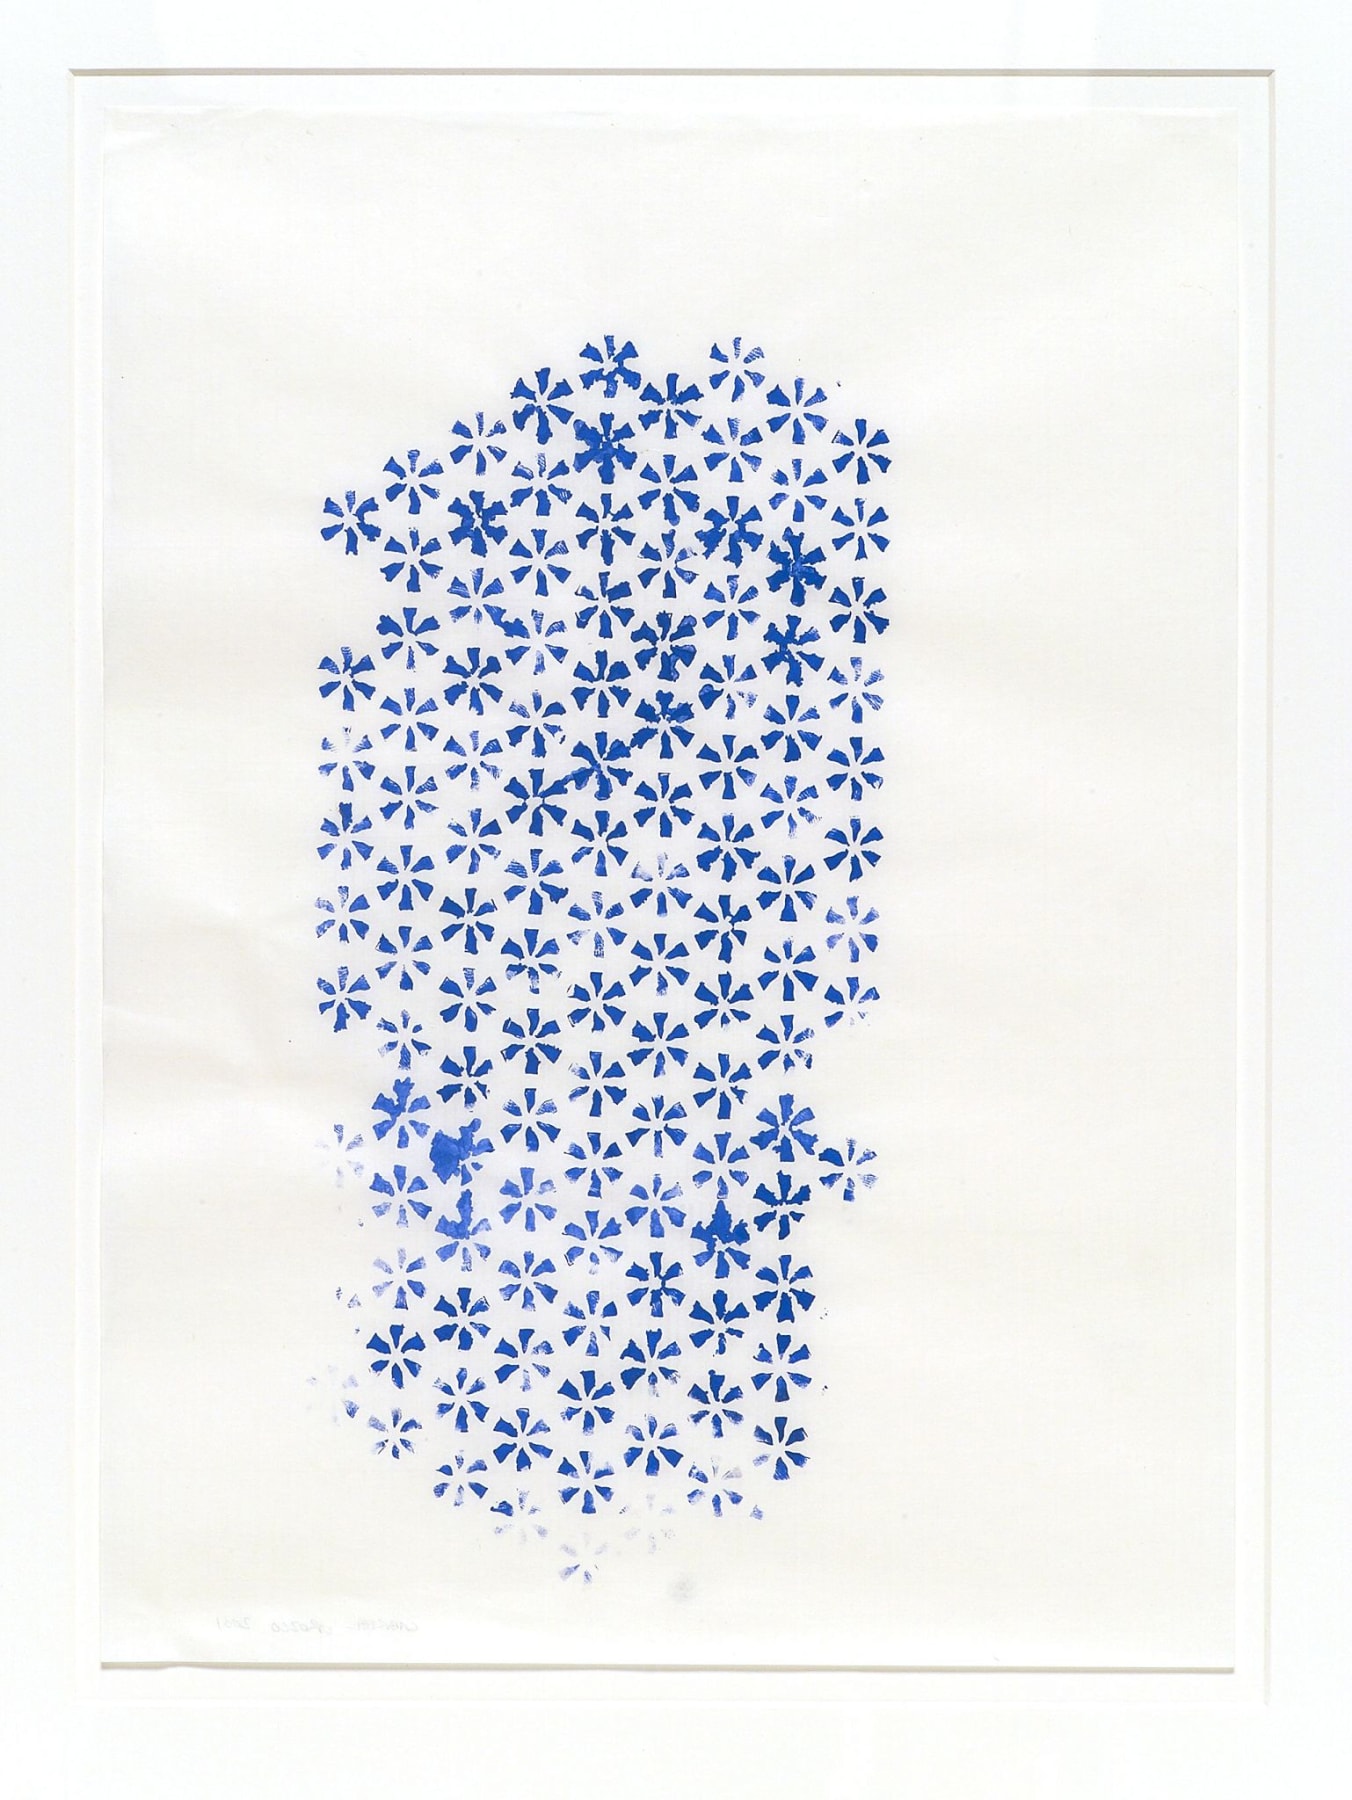 Gabriel Orozco, Katagami Prints 5, 2001